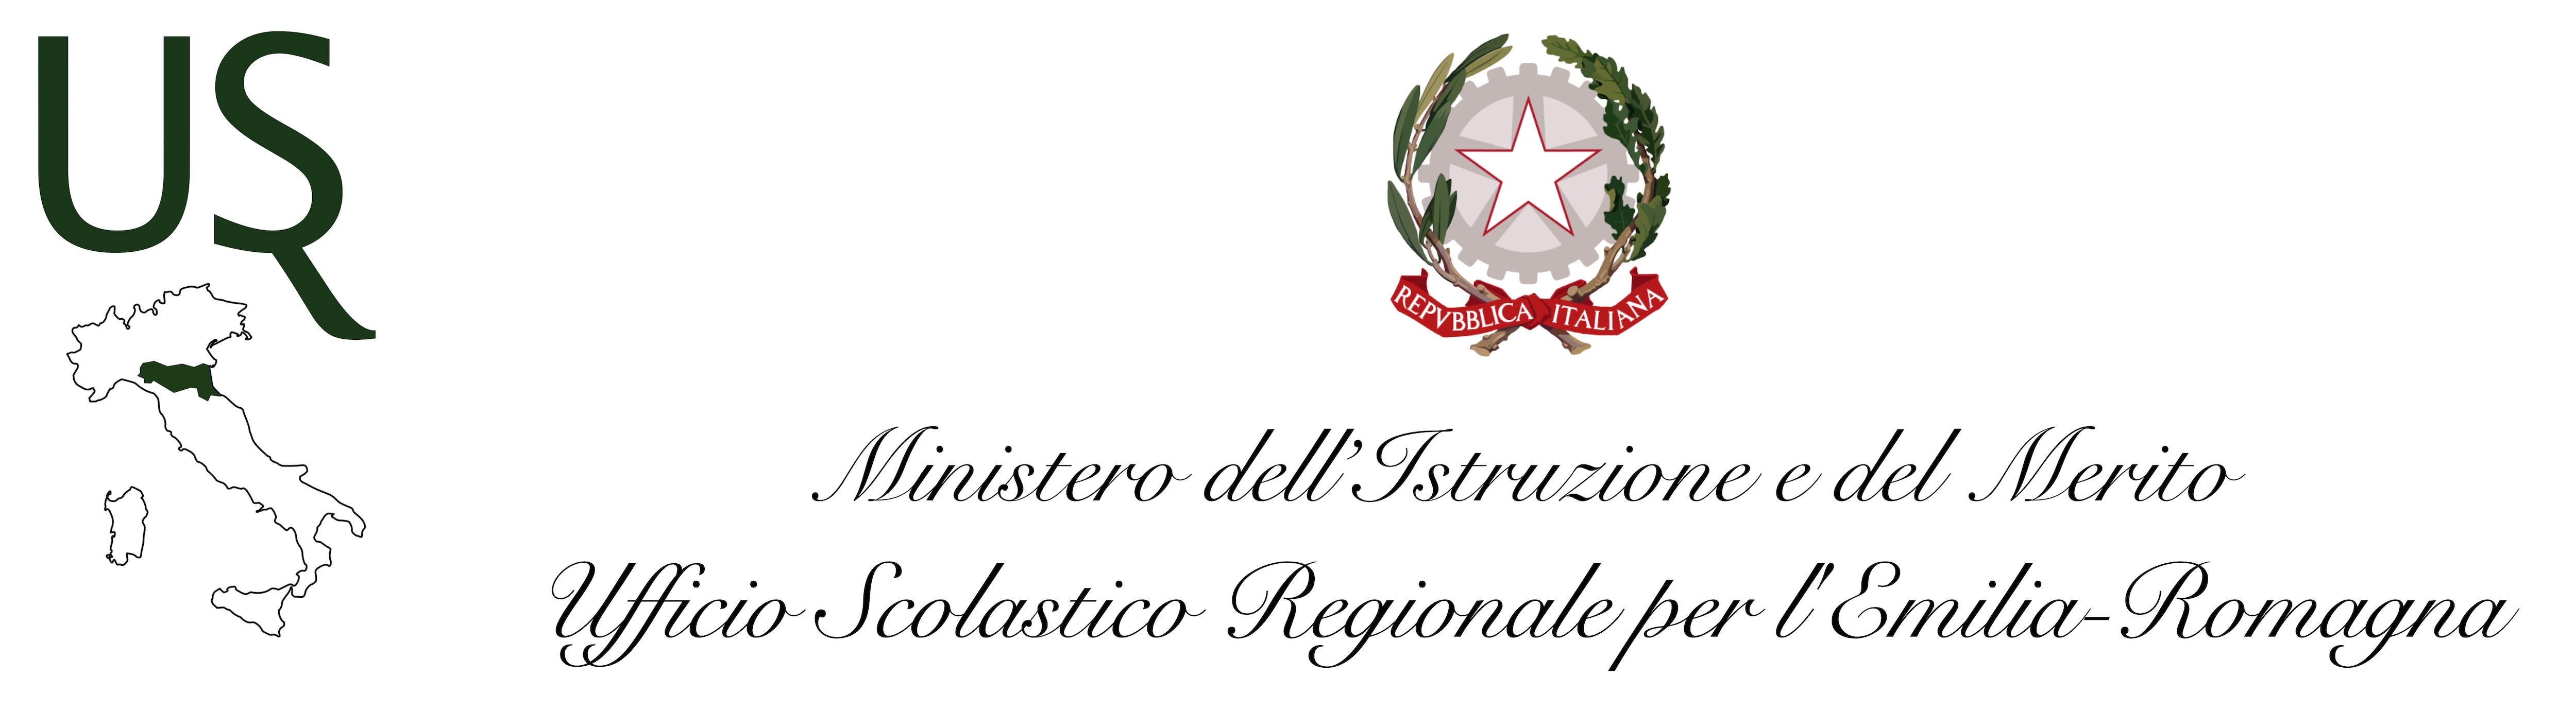 logo USR